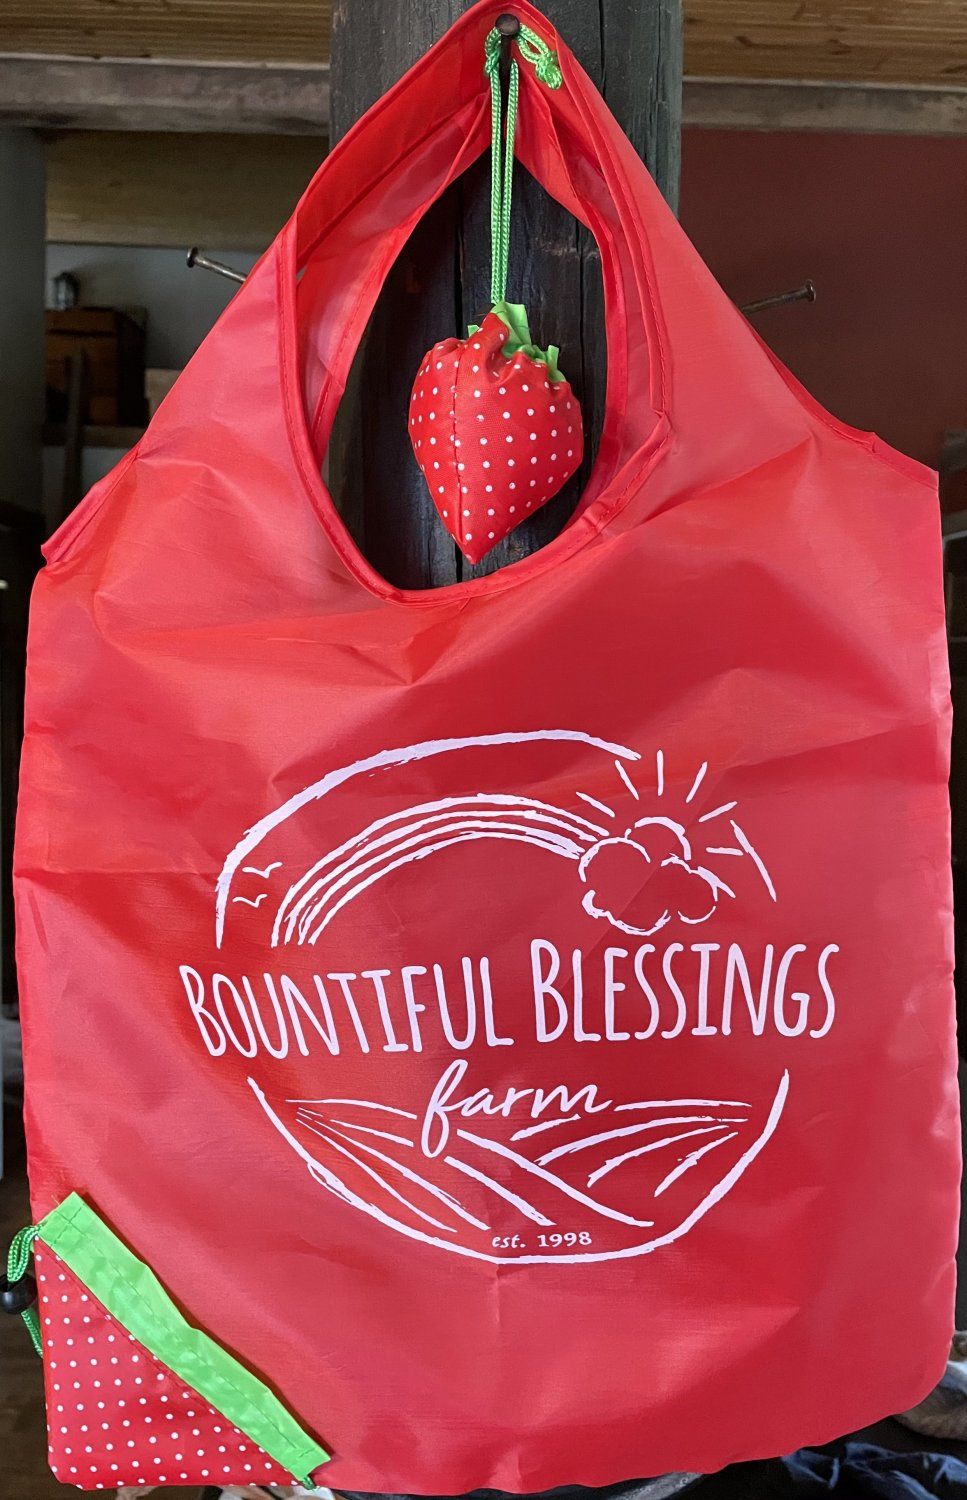 Next Happening: Bountiful Blessings Bags